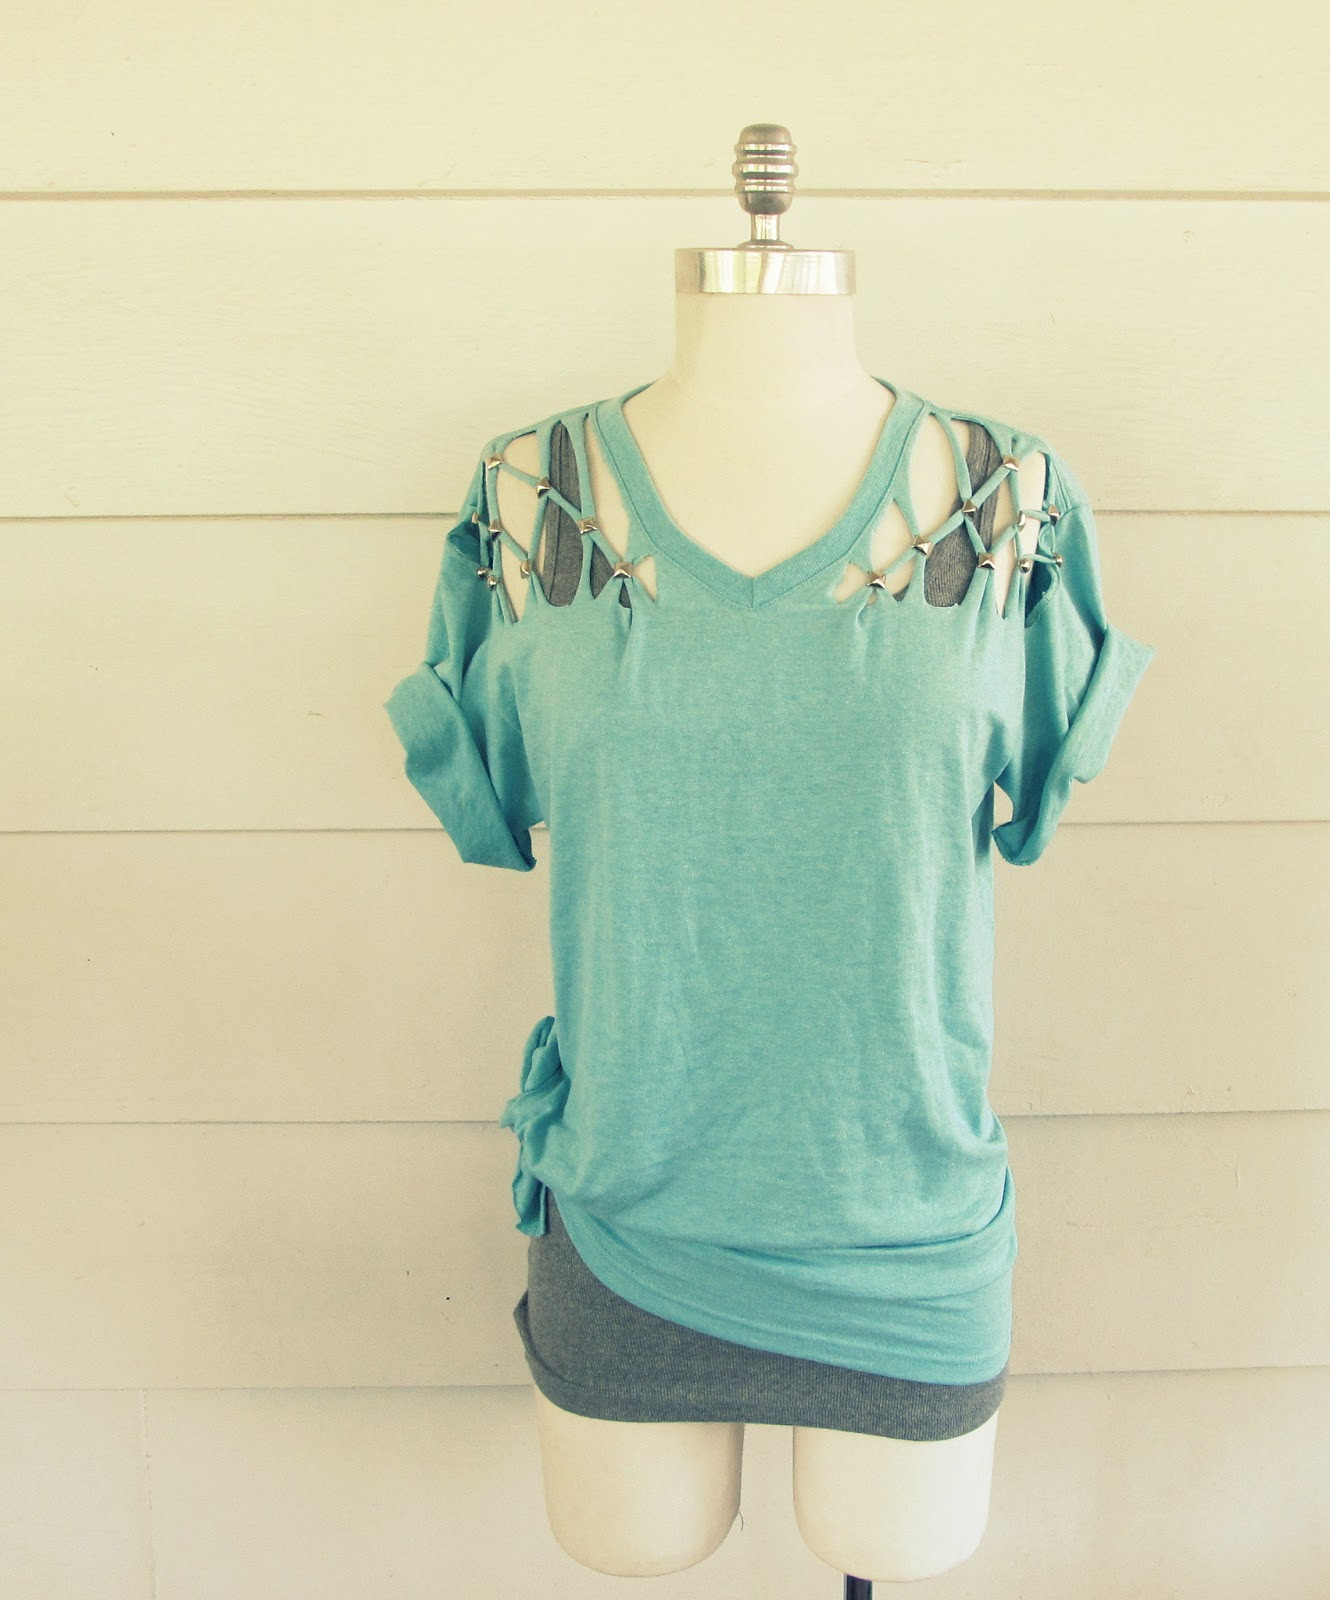 Best ideas about T Shirt DIY
. Save or Pin WobiSobi No Sew Lattice Stud T shirt DIY Now.